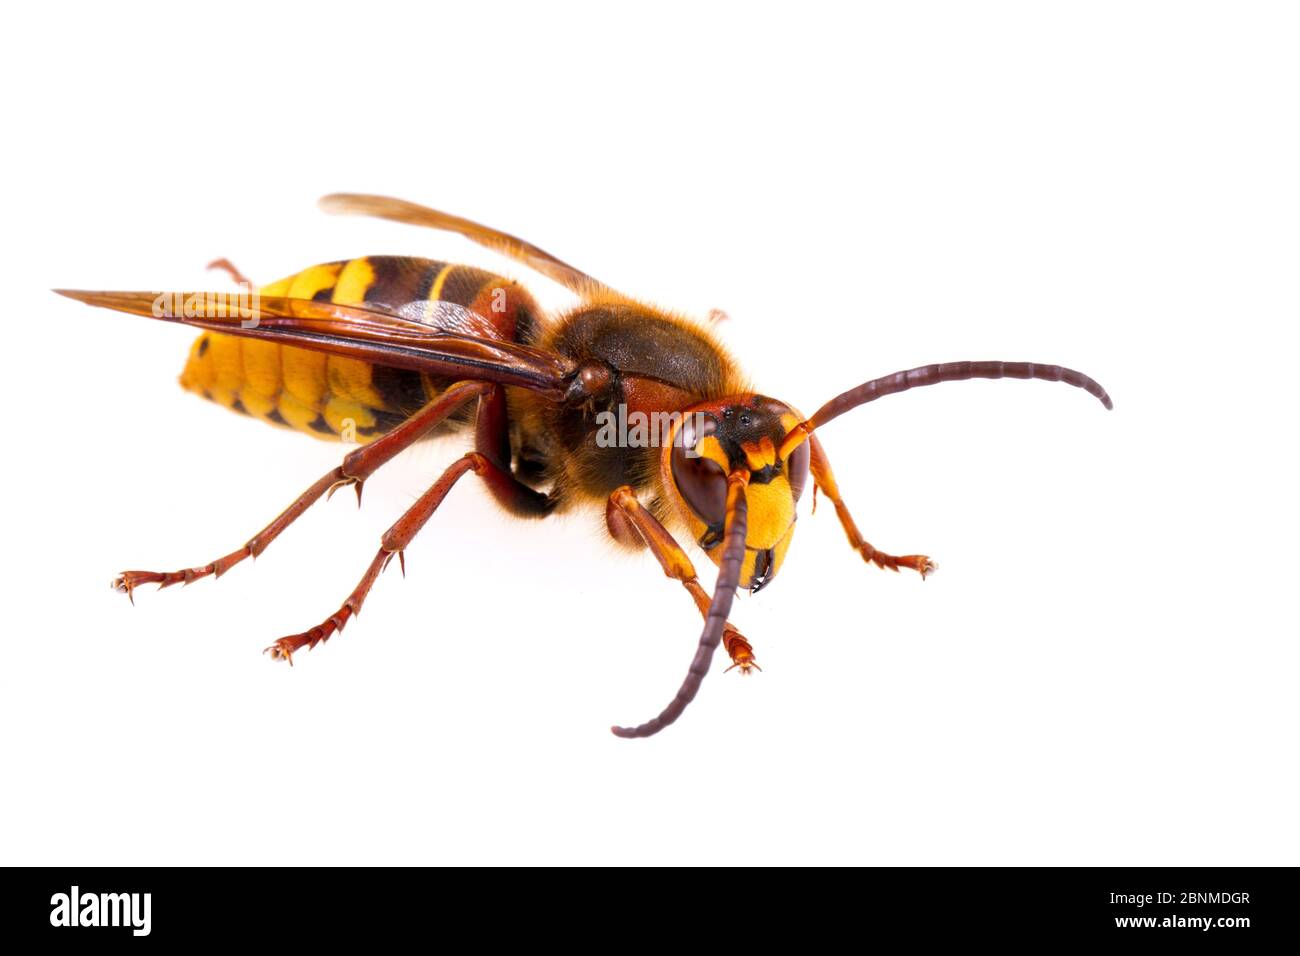 European hornet (Vespa crabro germana) on white background, Tuscaloosa County, Alabama, USA September Stock Photo